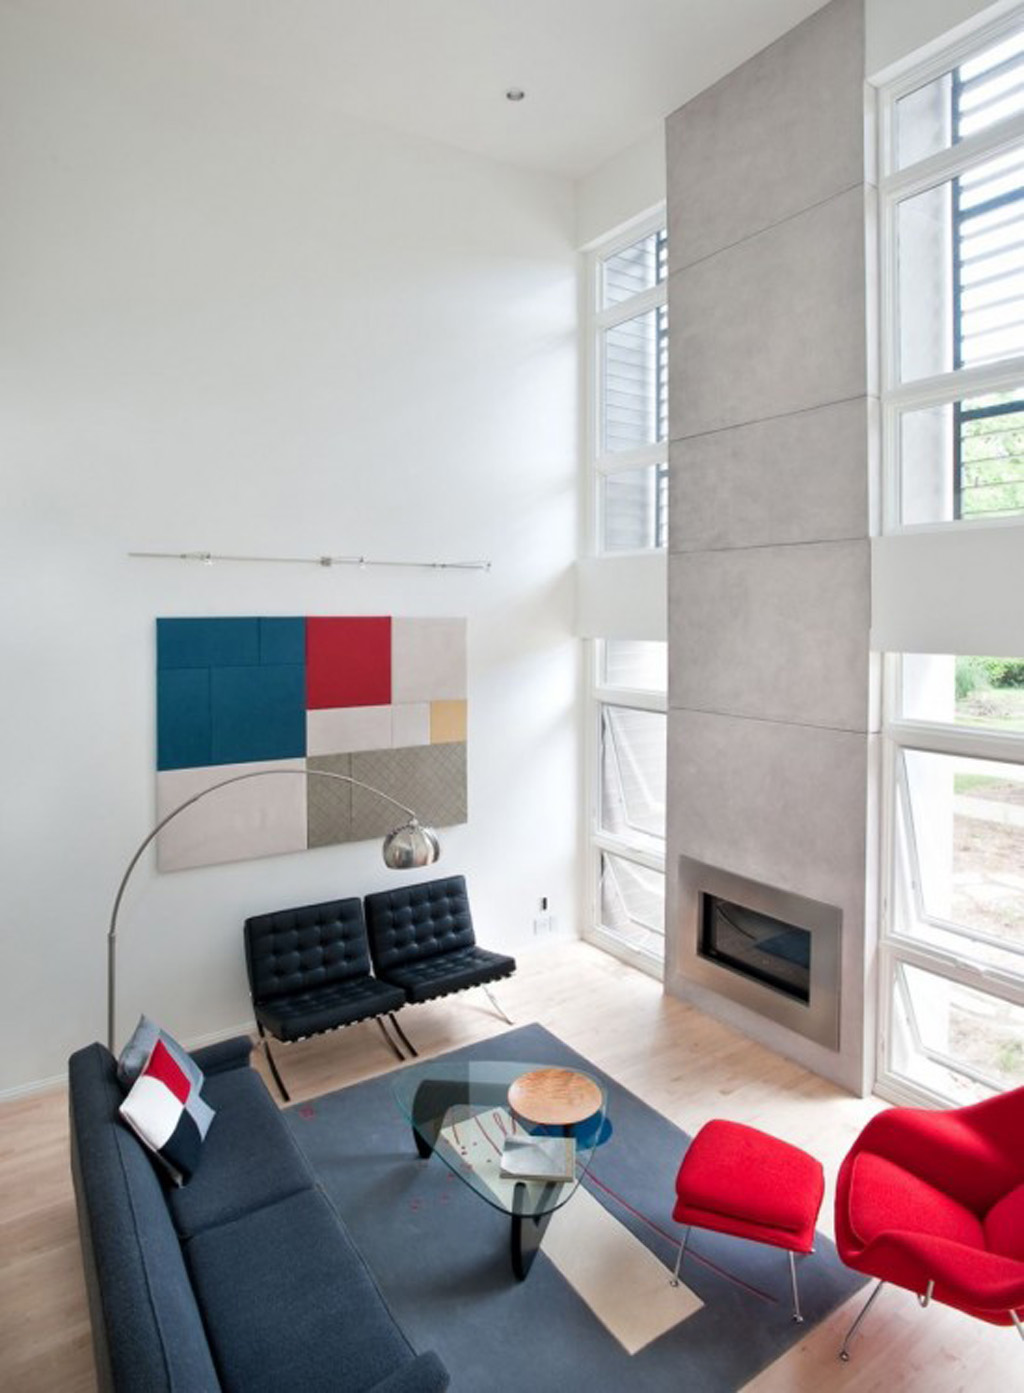 Comfortable Living Room Interior Design